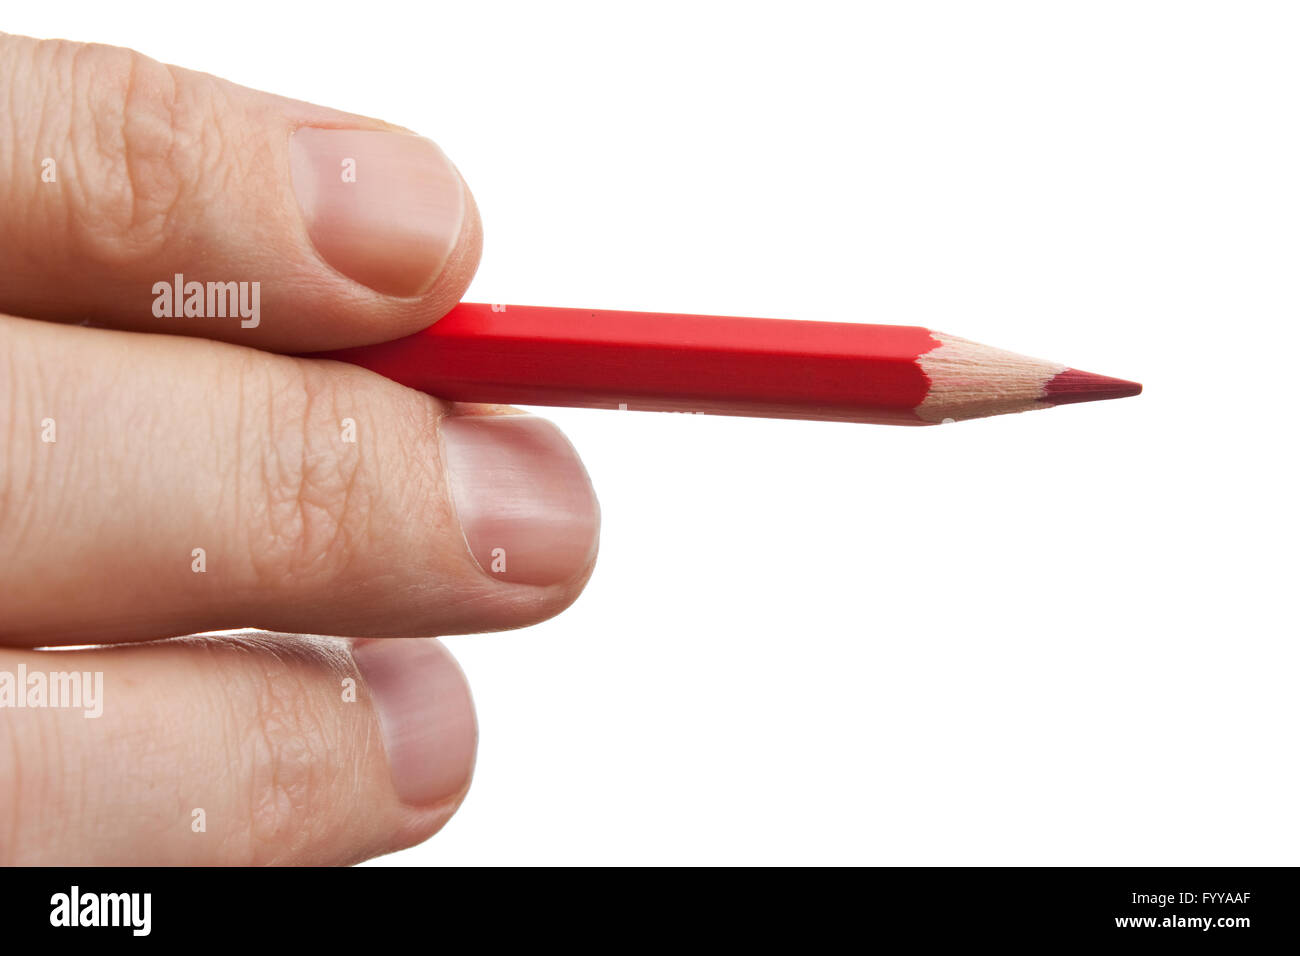 Карандаш красного цвета. Красный карандаш в руке. Красный круглый карандаш на руках. Косметический карандаш в руке.